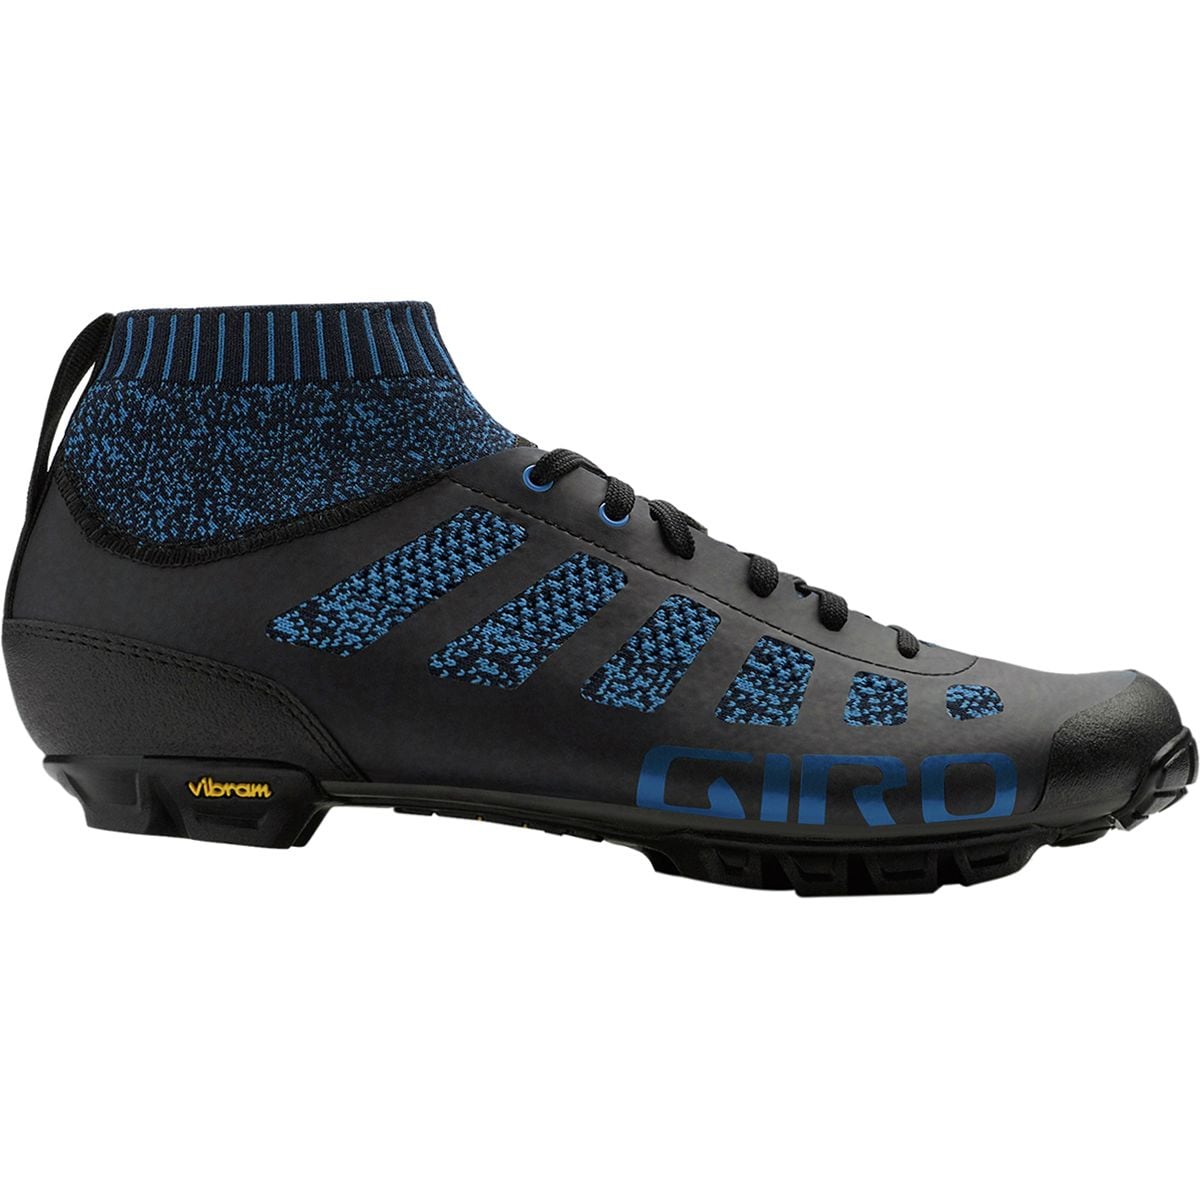 Giro Empire VR70 Knit Cycling Shoe - Men's Midnight/Blue, 41.5